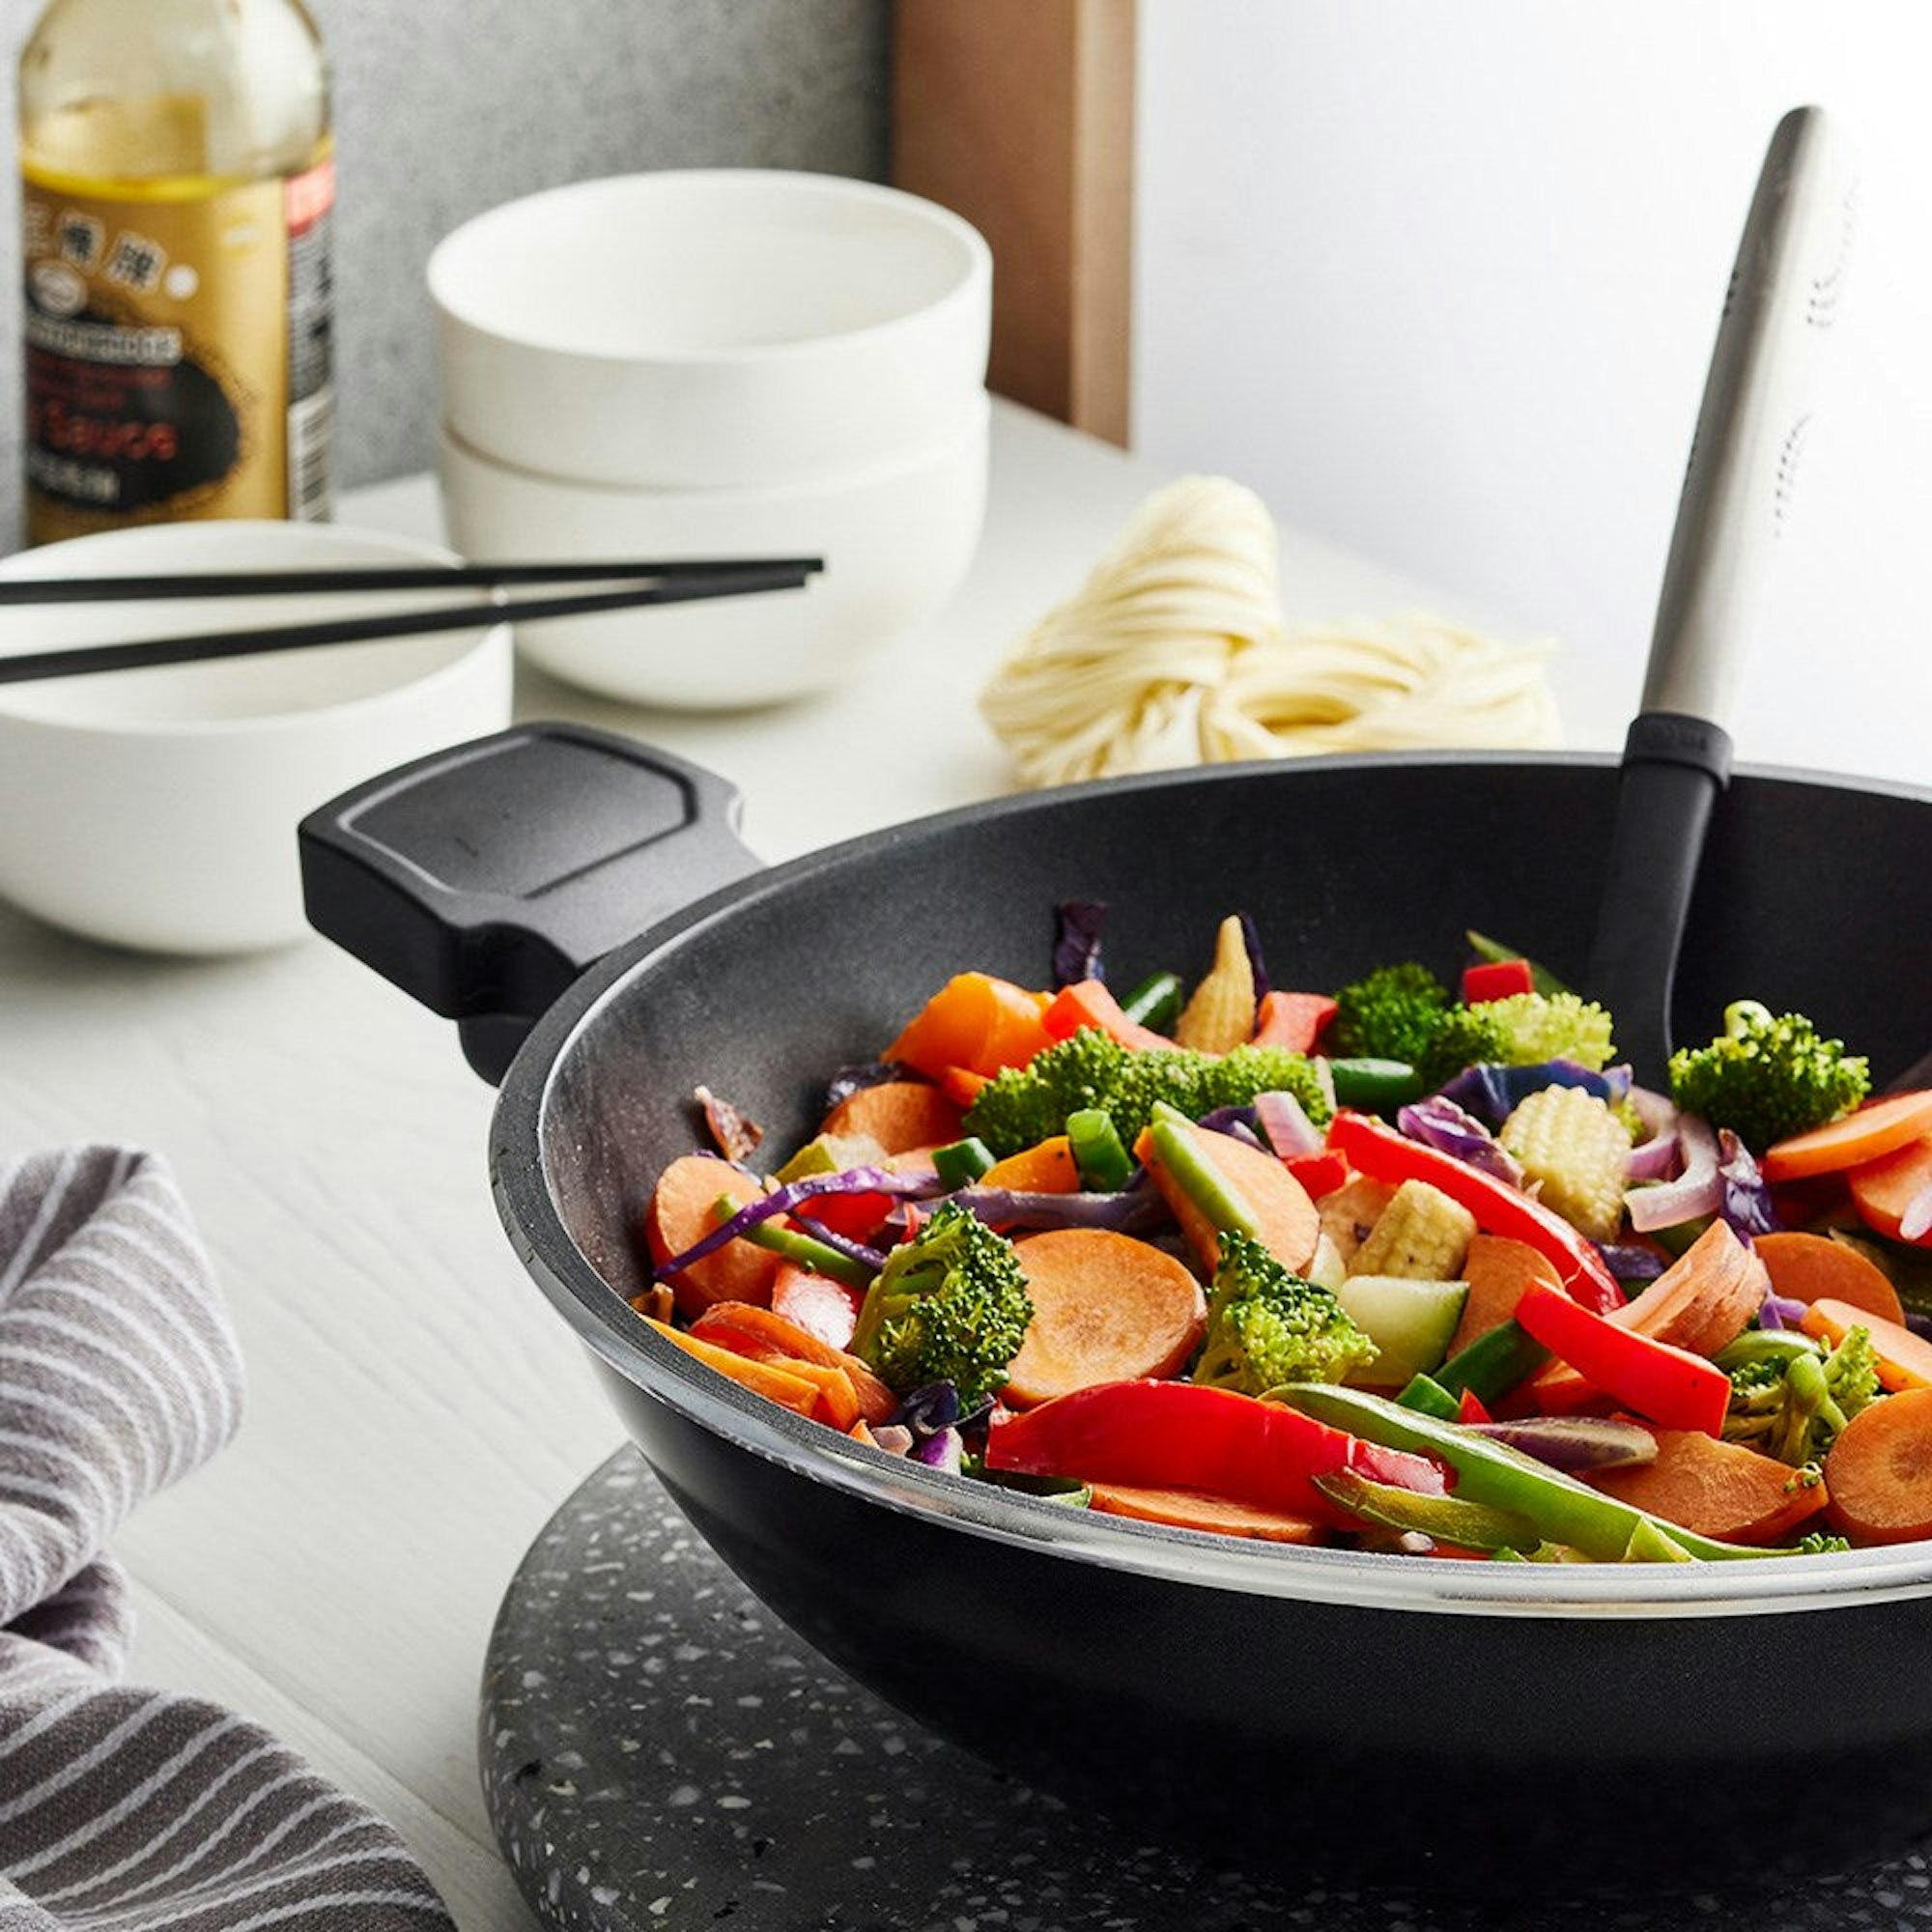 How to Cook Stir-Fry - Stir Frying tips - vegetable stir fry in wok - Robins Kitchen Blog